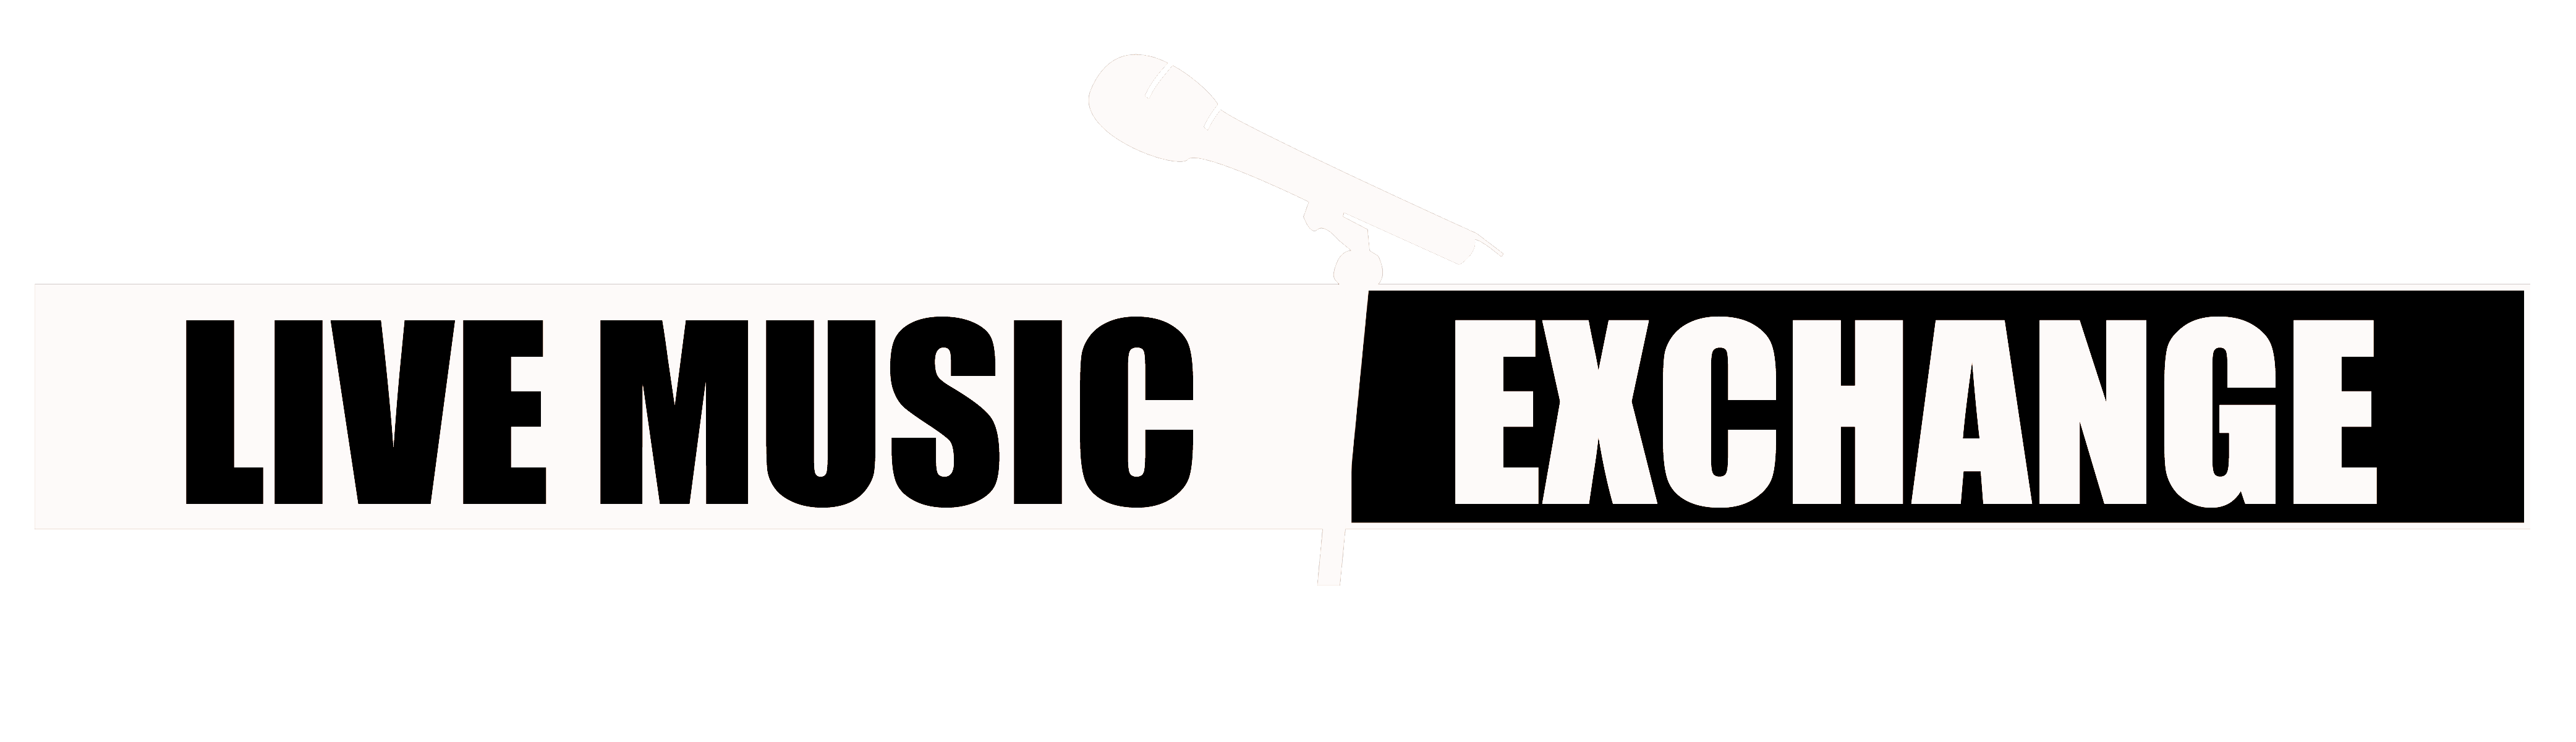 Live Music Exchange logo